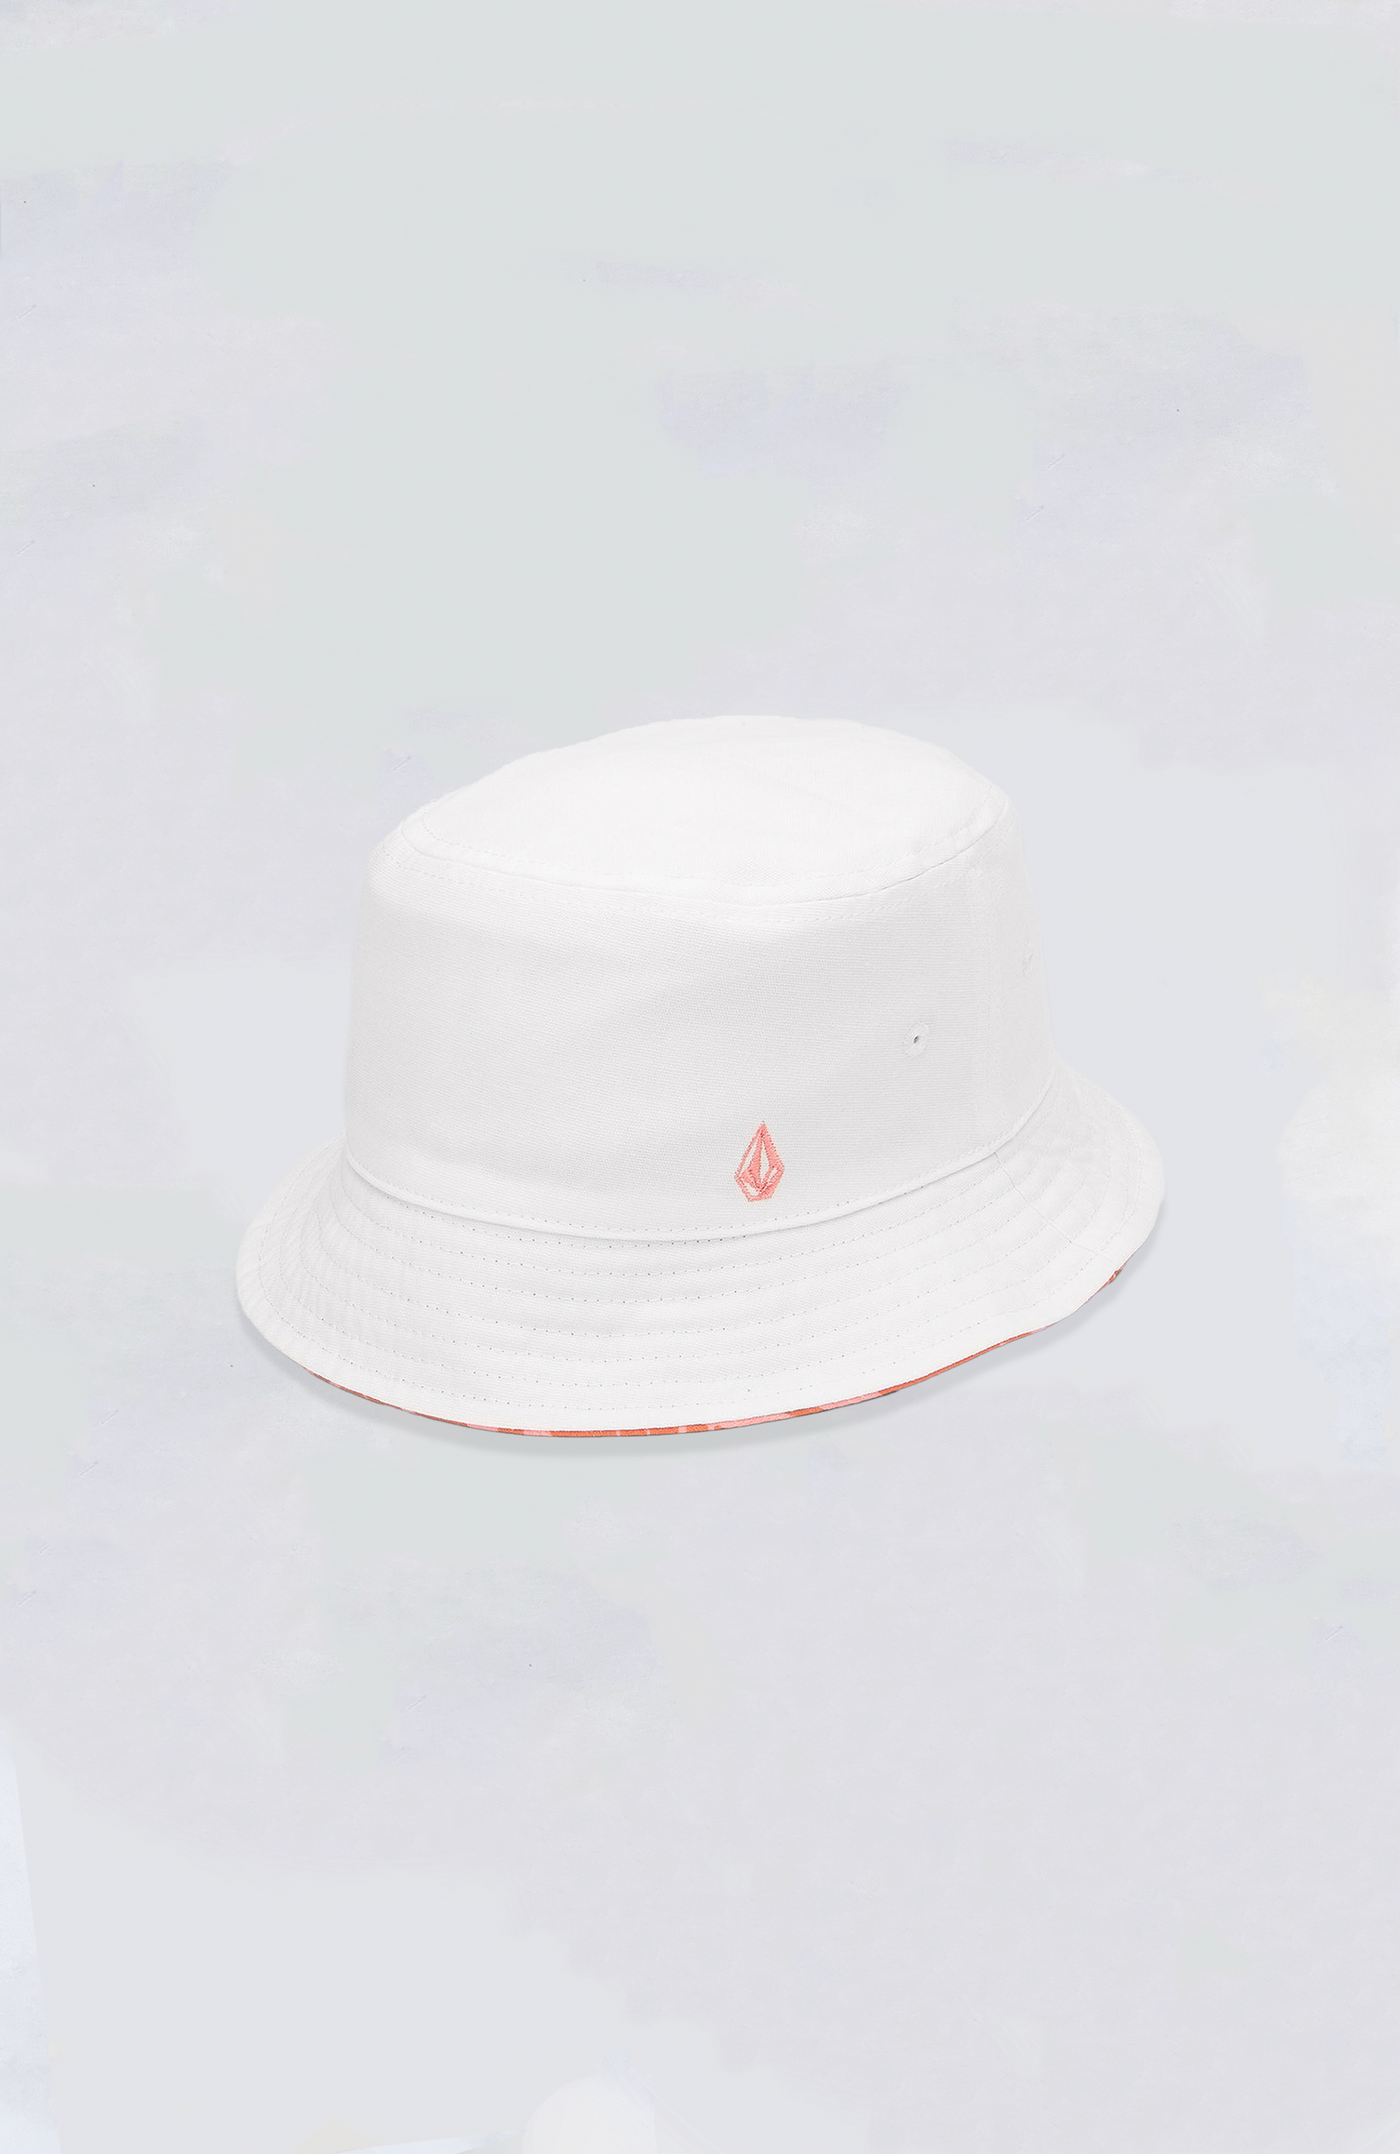 Volcom - Women's Blocked Out Bucket Hat